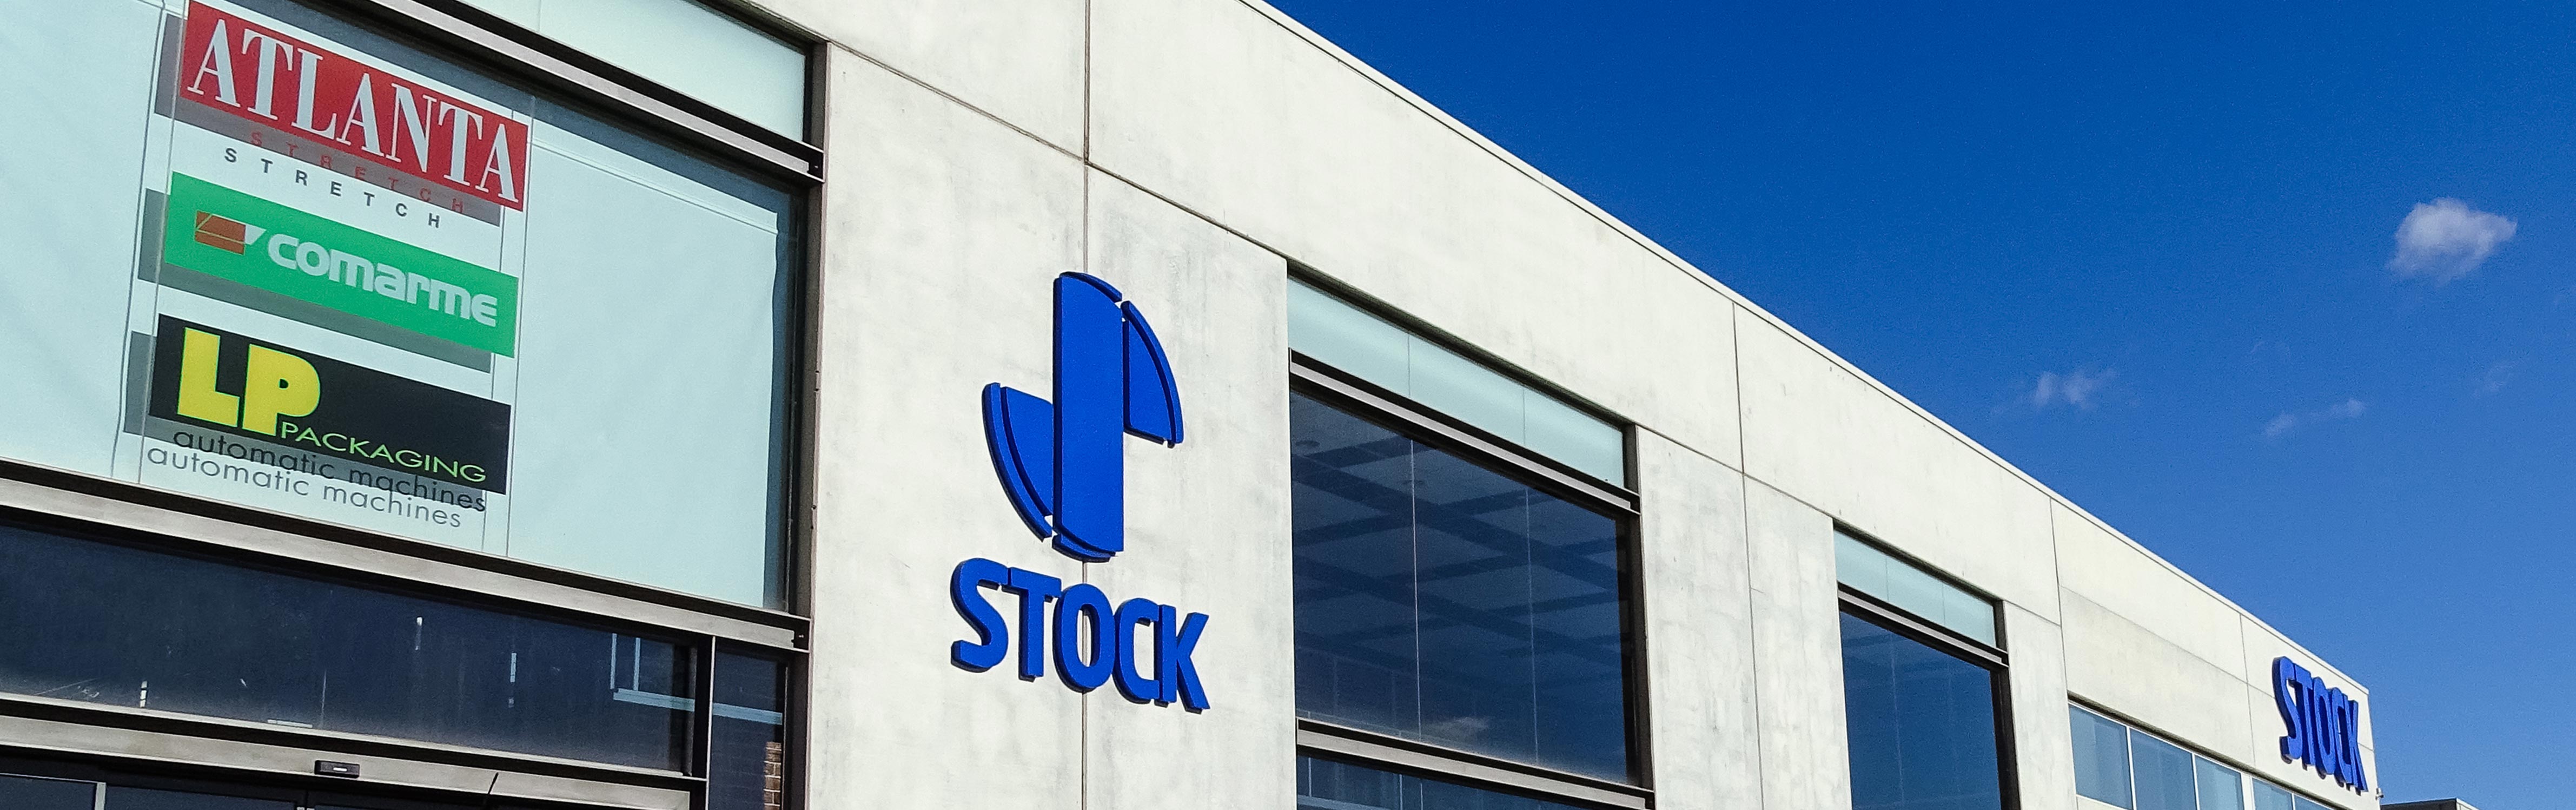 Stock Plus - Empresa